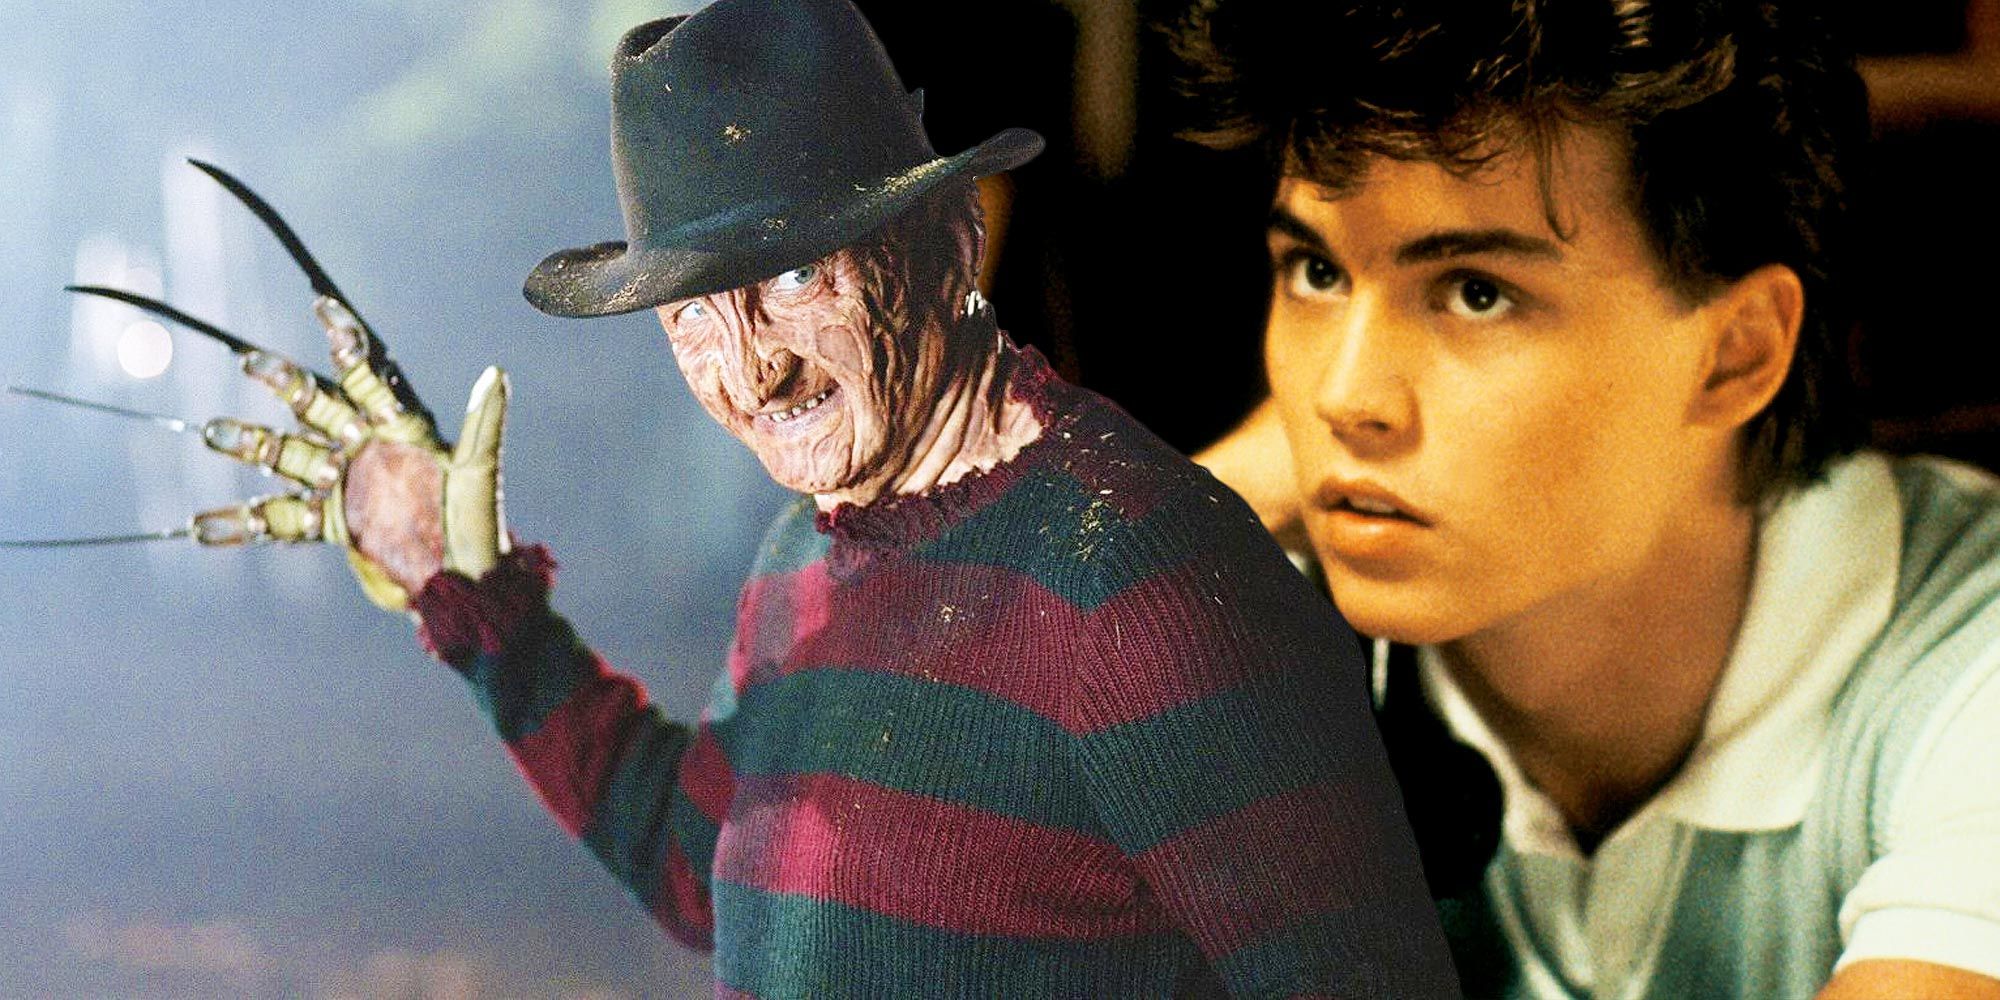 A Nightmare on Elm Street's Robert Englund terrified someone in public